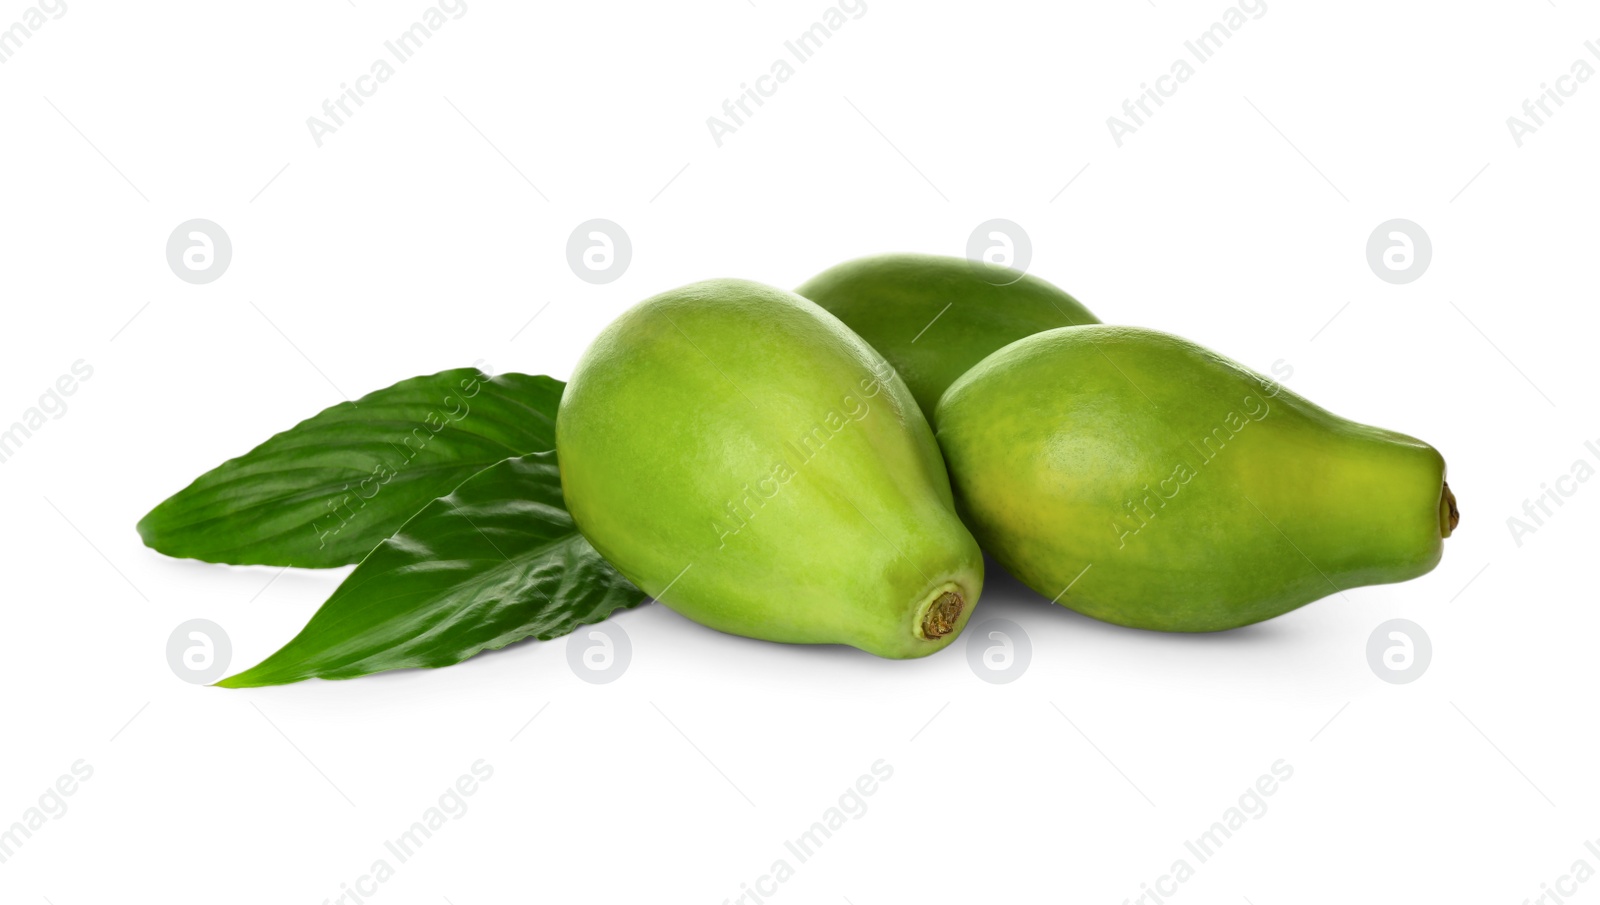 Photo of Fresh ripe papaya fruits with green leaves on white background